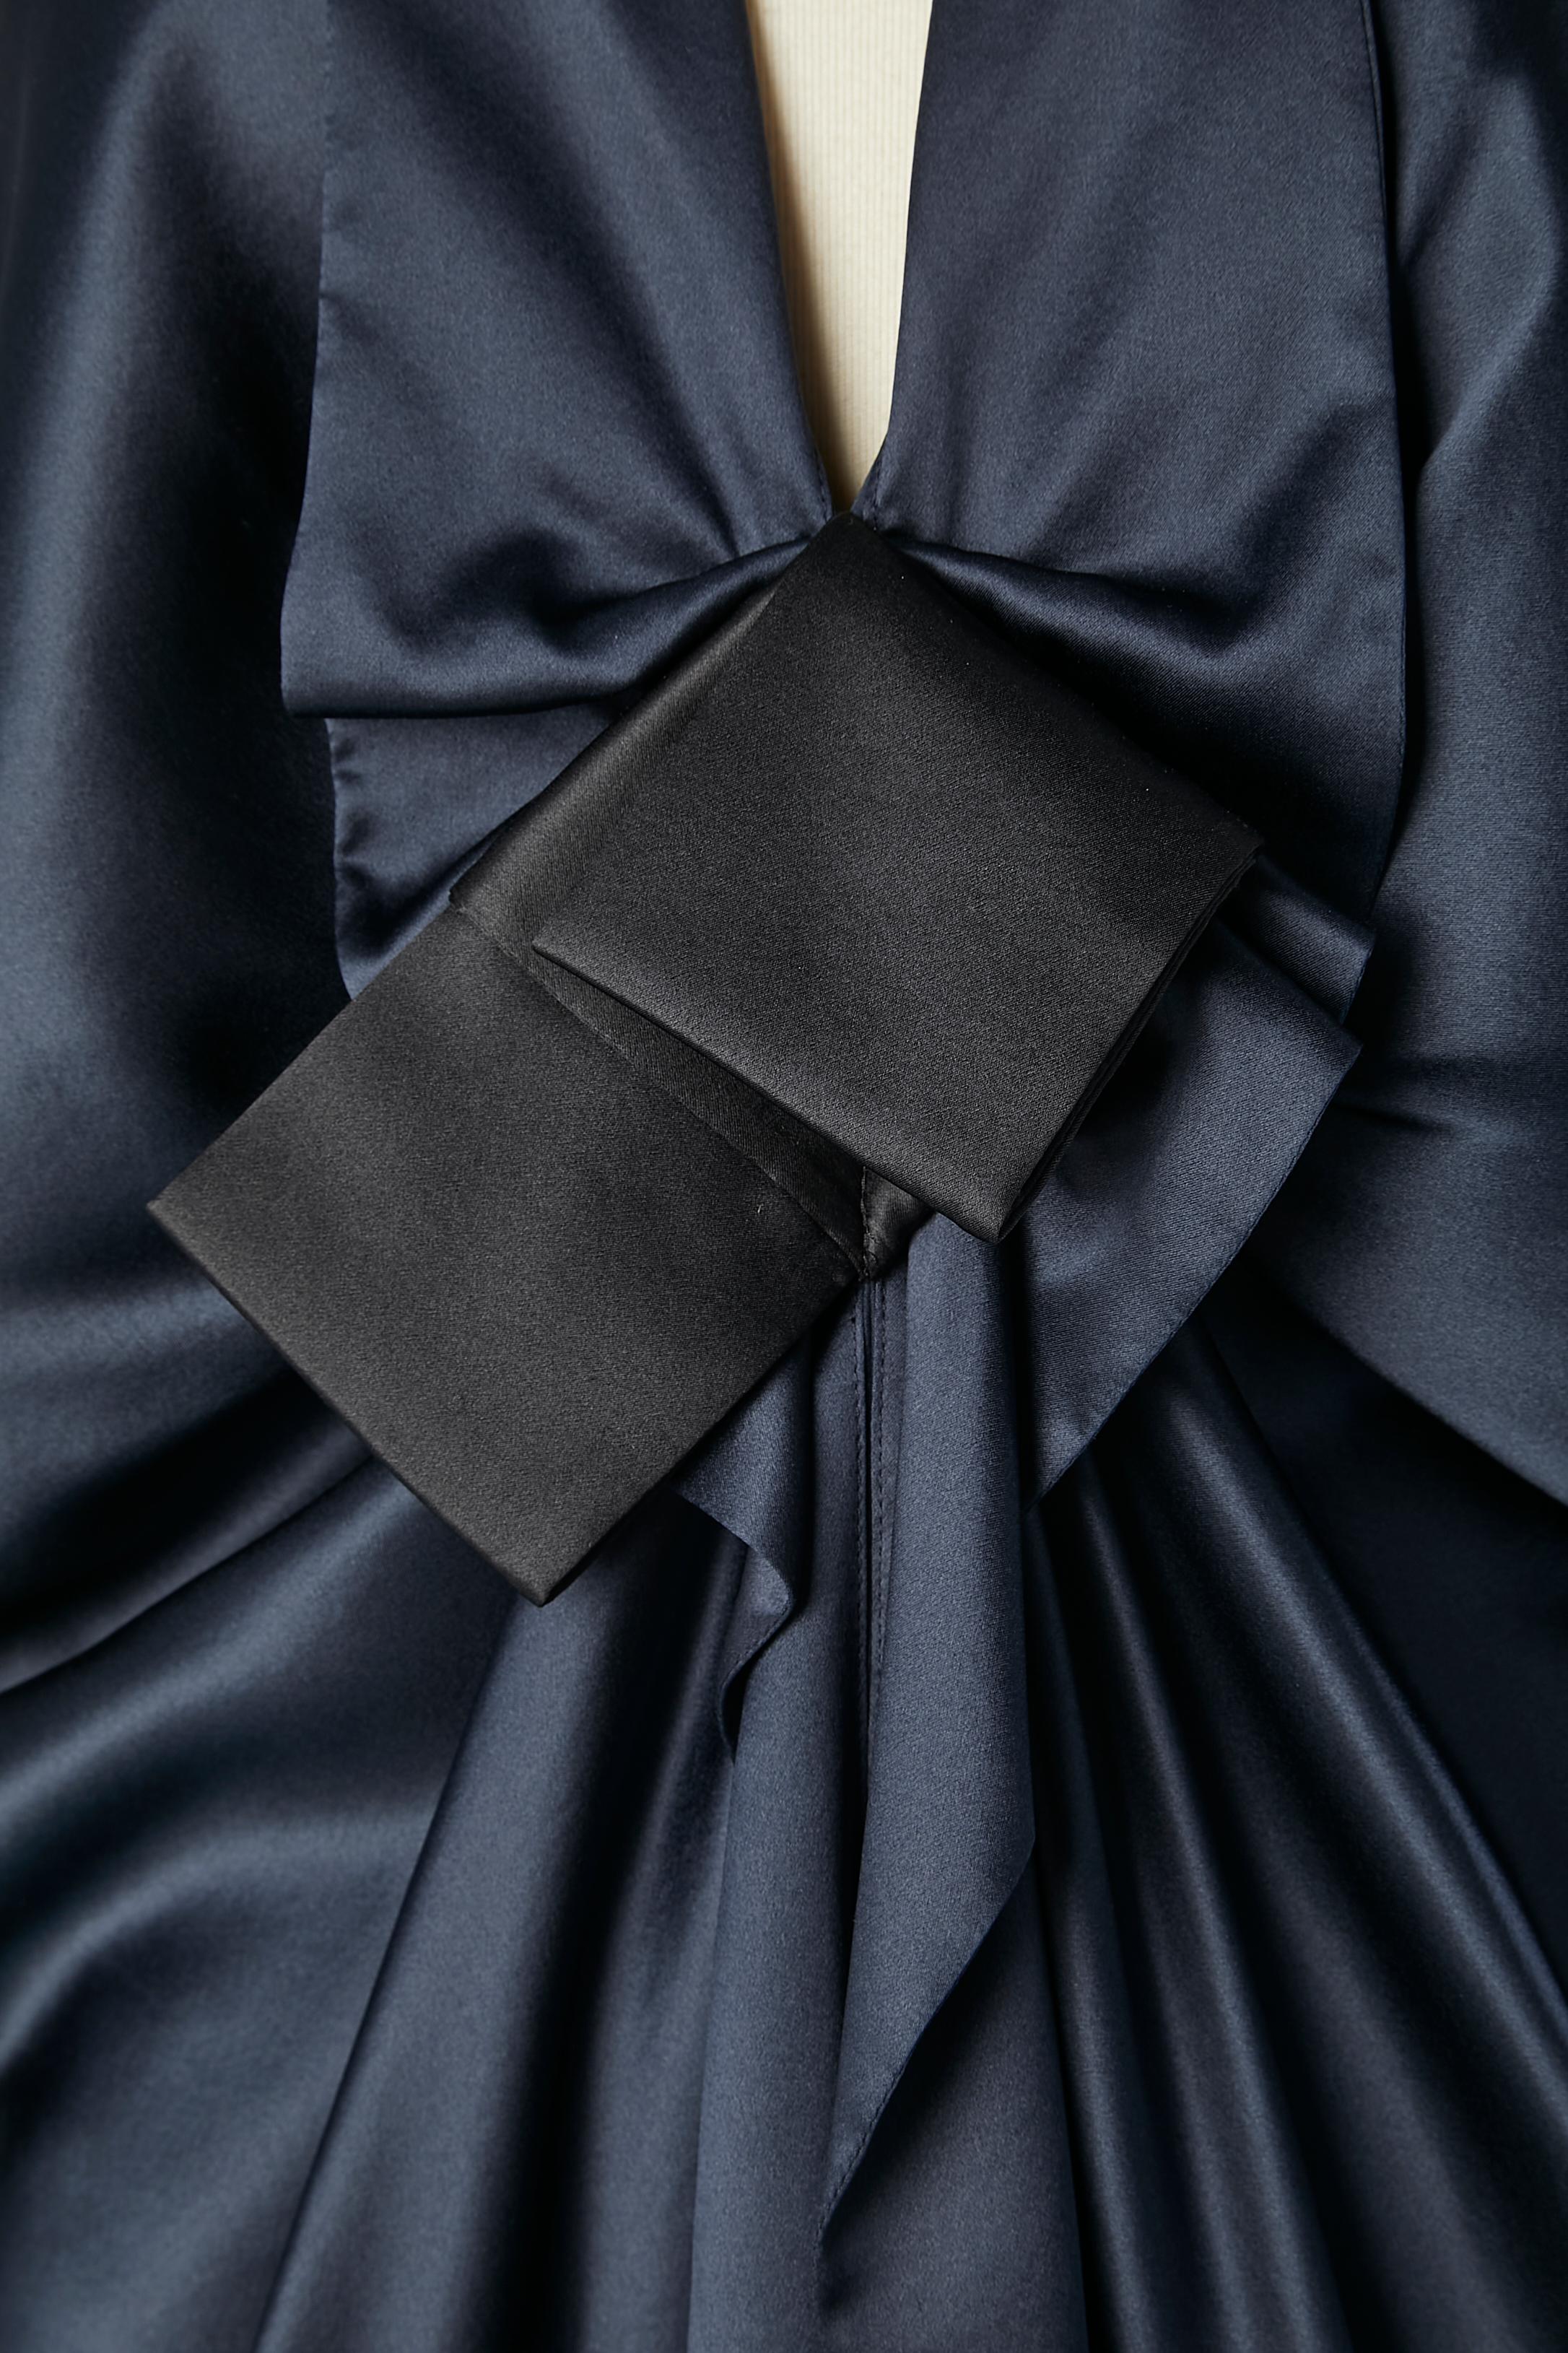 Navy blue draped cocktail dress with black satin bow Lanvin by Alber Elbaz  In Excellent Condition For Sale In Saint-Ouen-Sur-Seine, FR